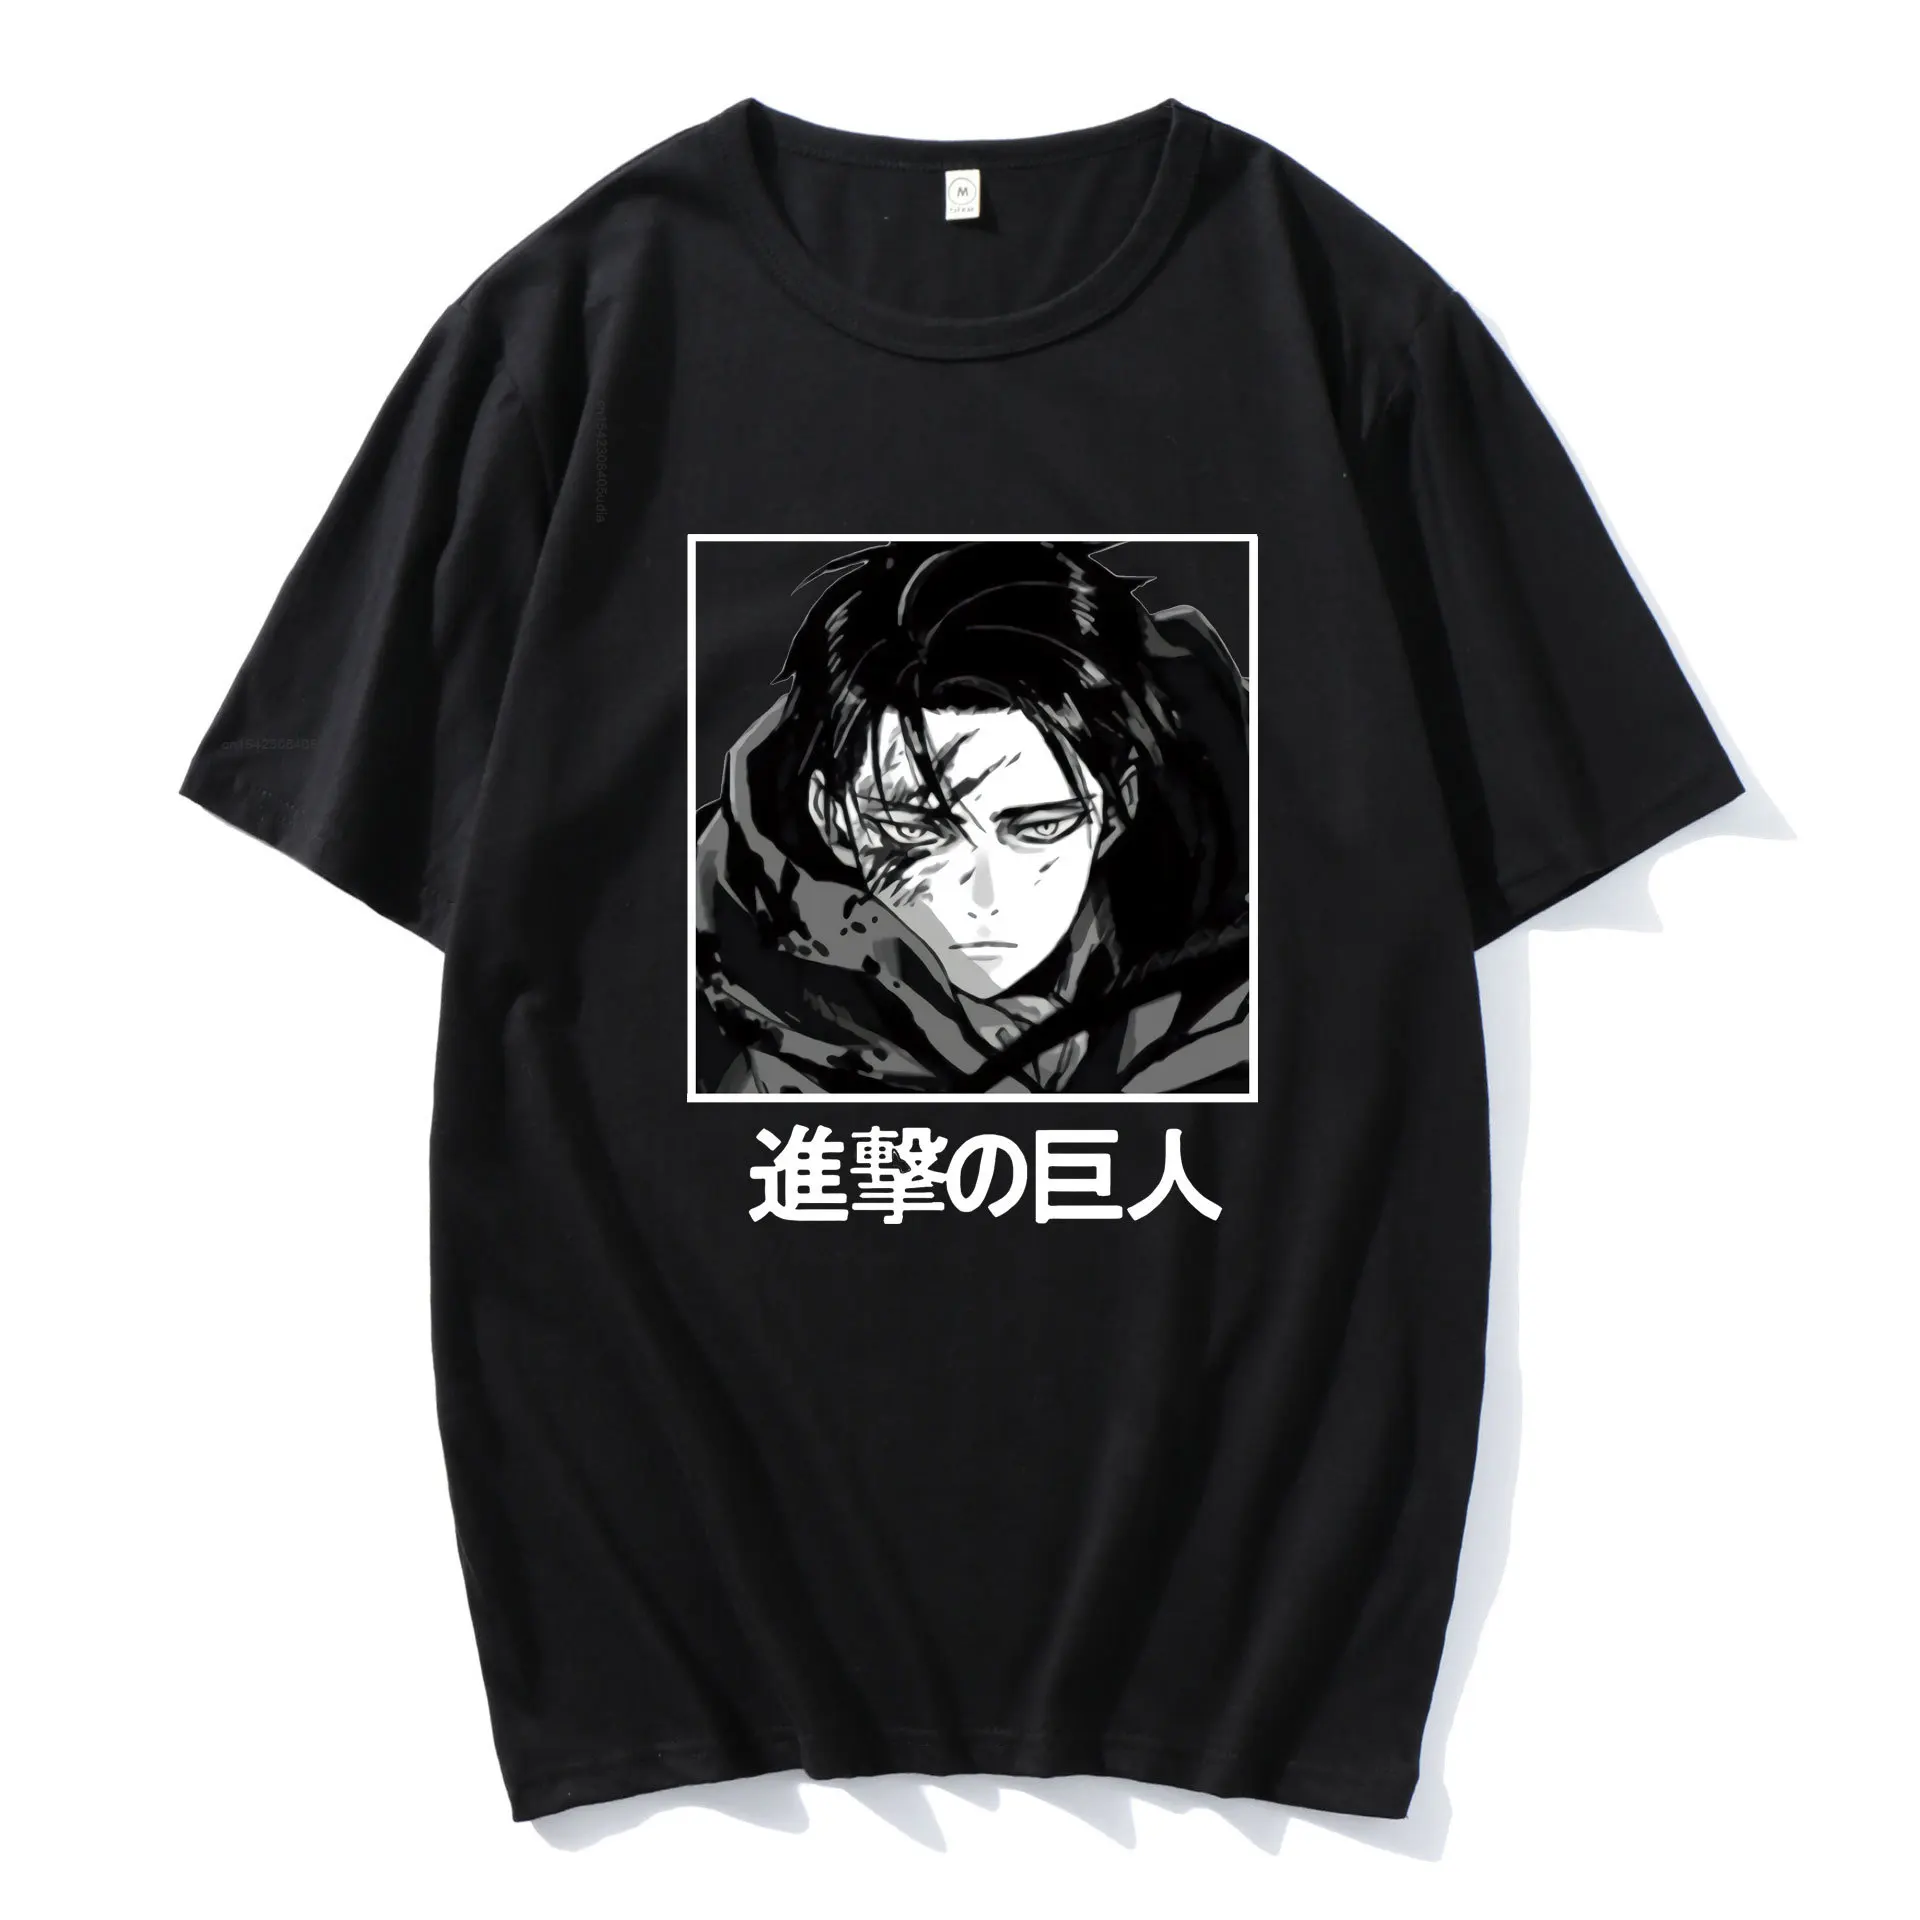 Kawaii Jiyuu No Tsubasa Graphic T-Shirt Hot-Blooded Japanese Anime Attack For Titan Fashion All-Match Harajuku Allen T-Shirt